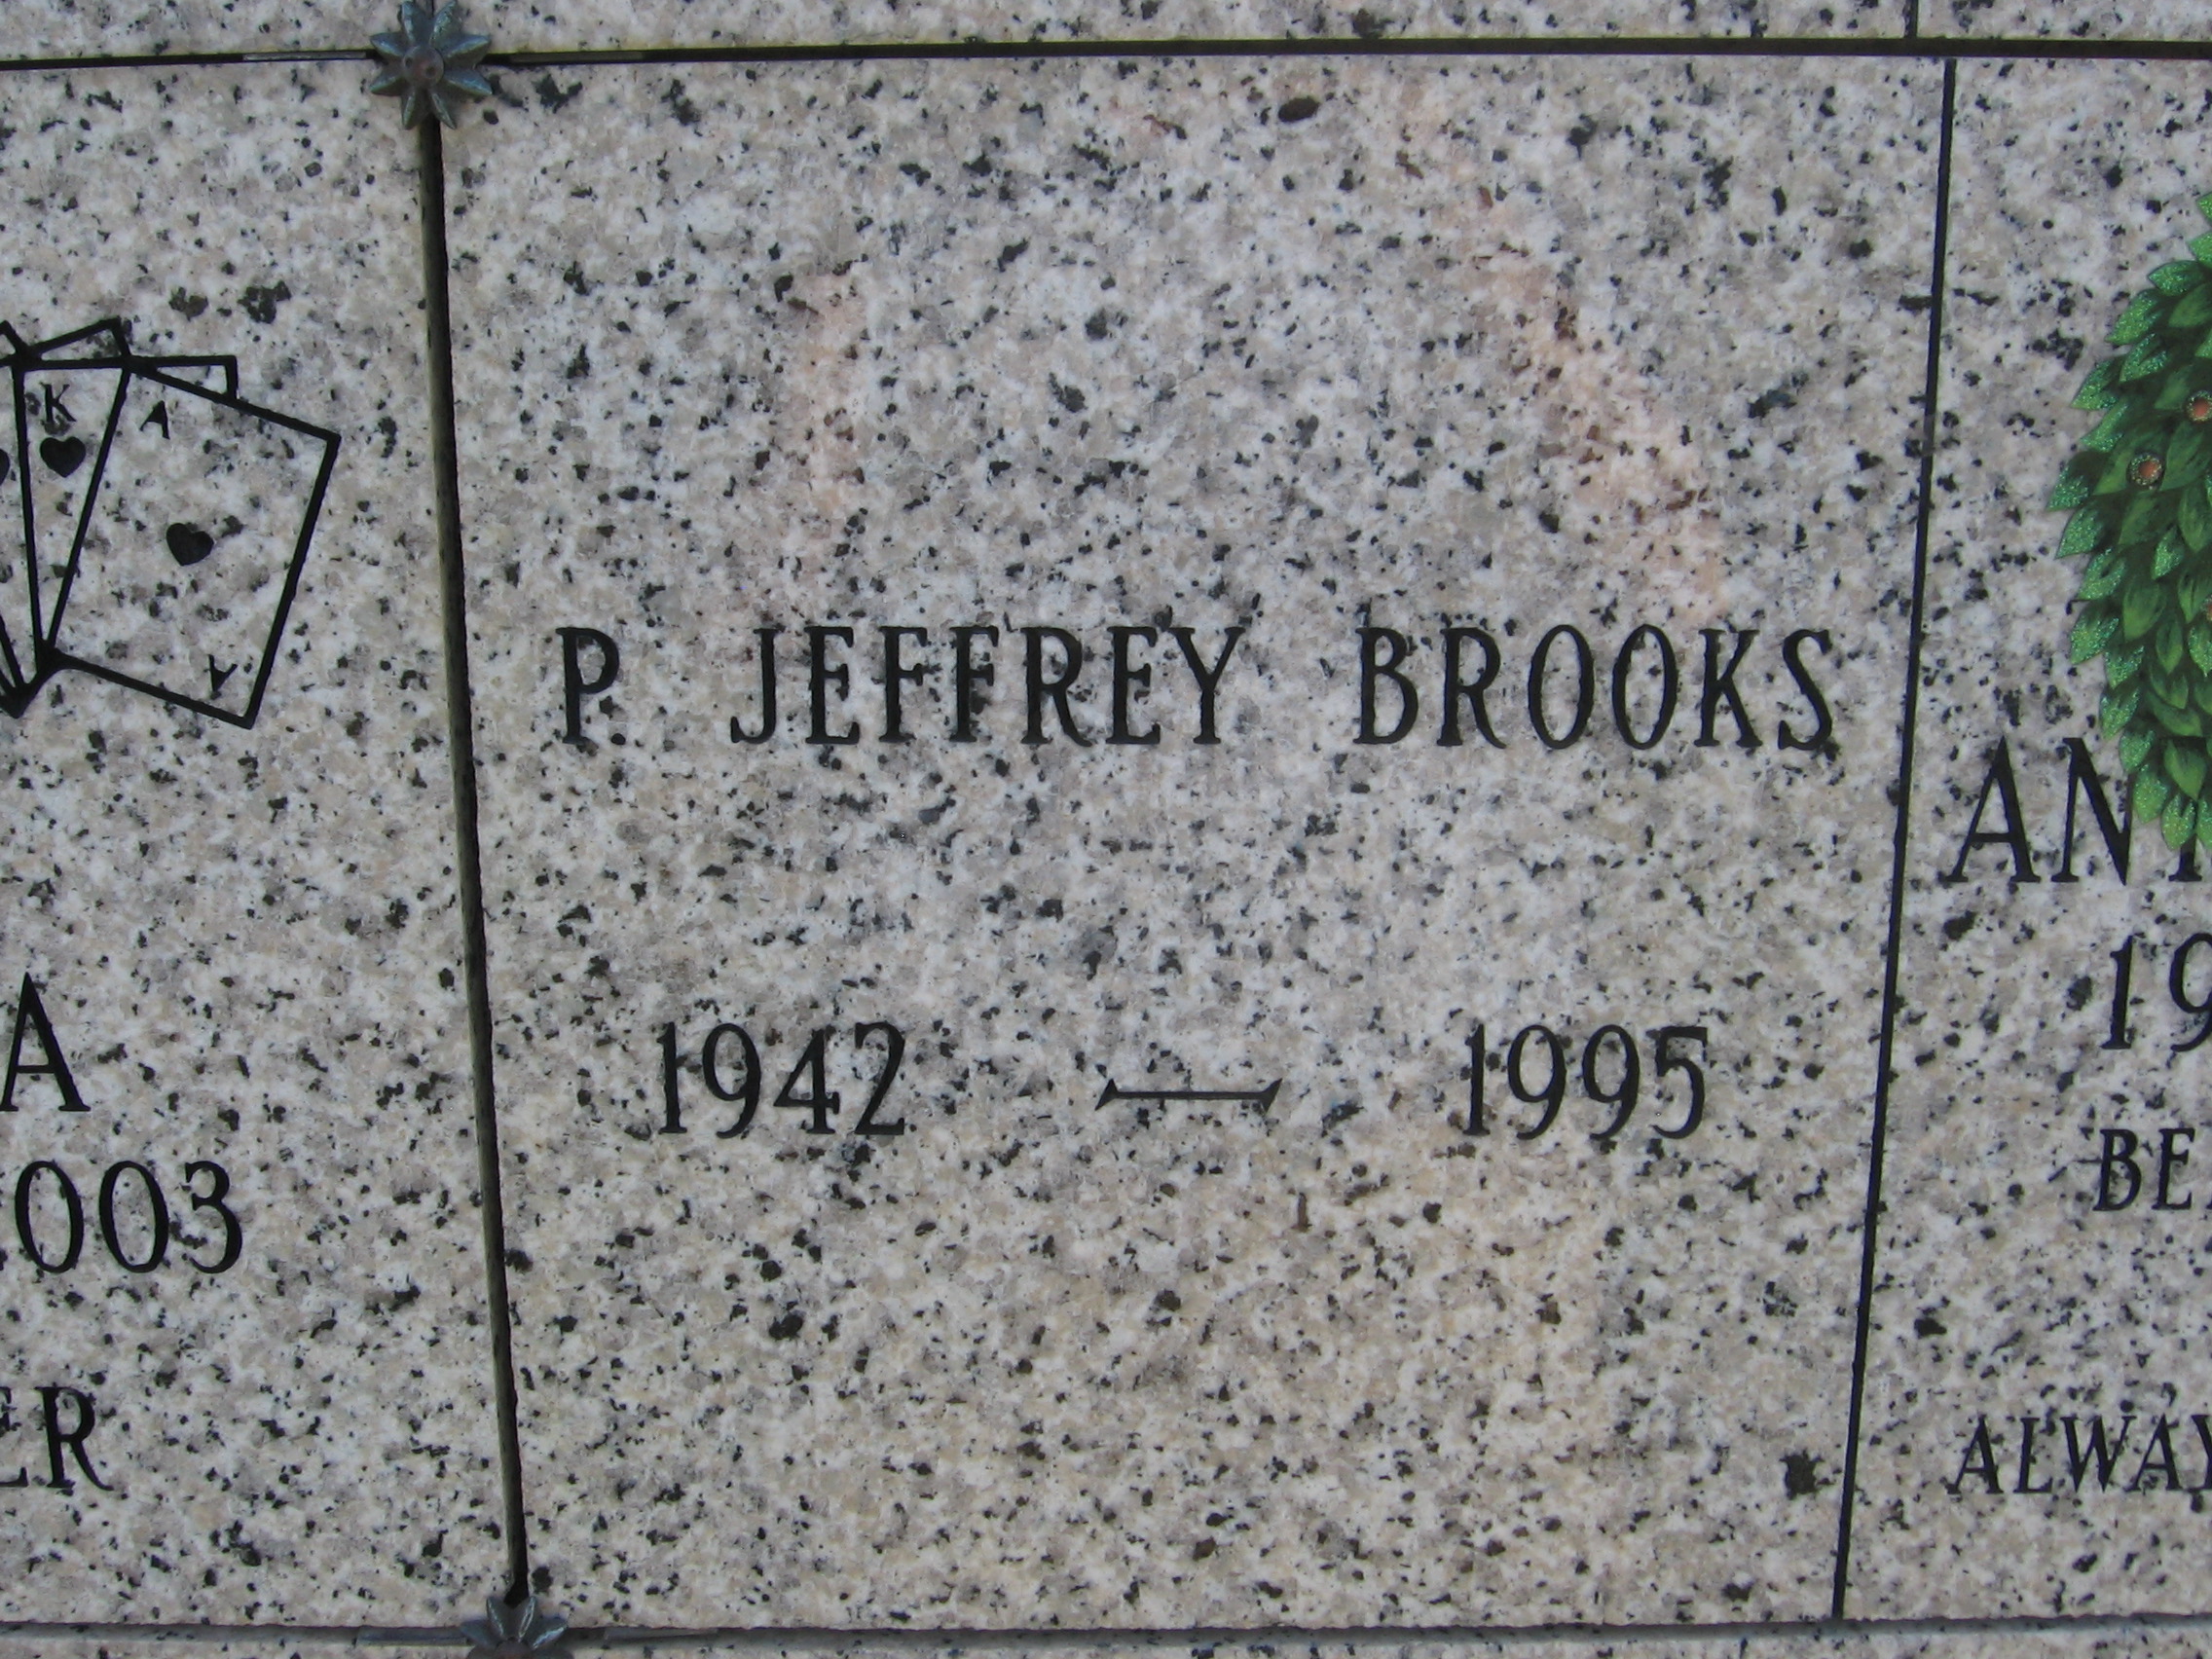 P Jeffrey Brooks